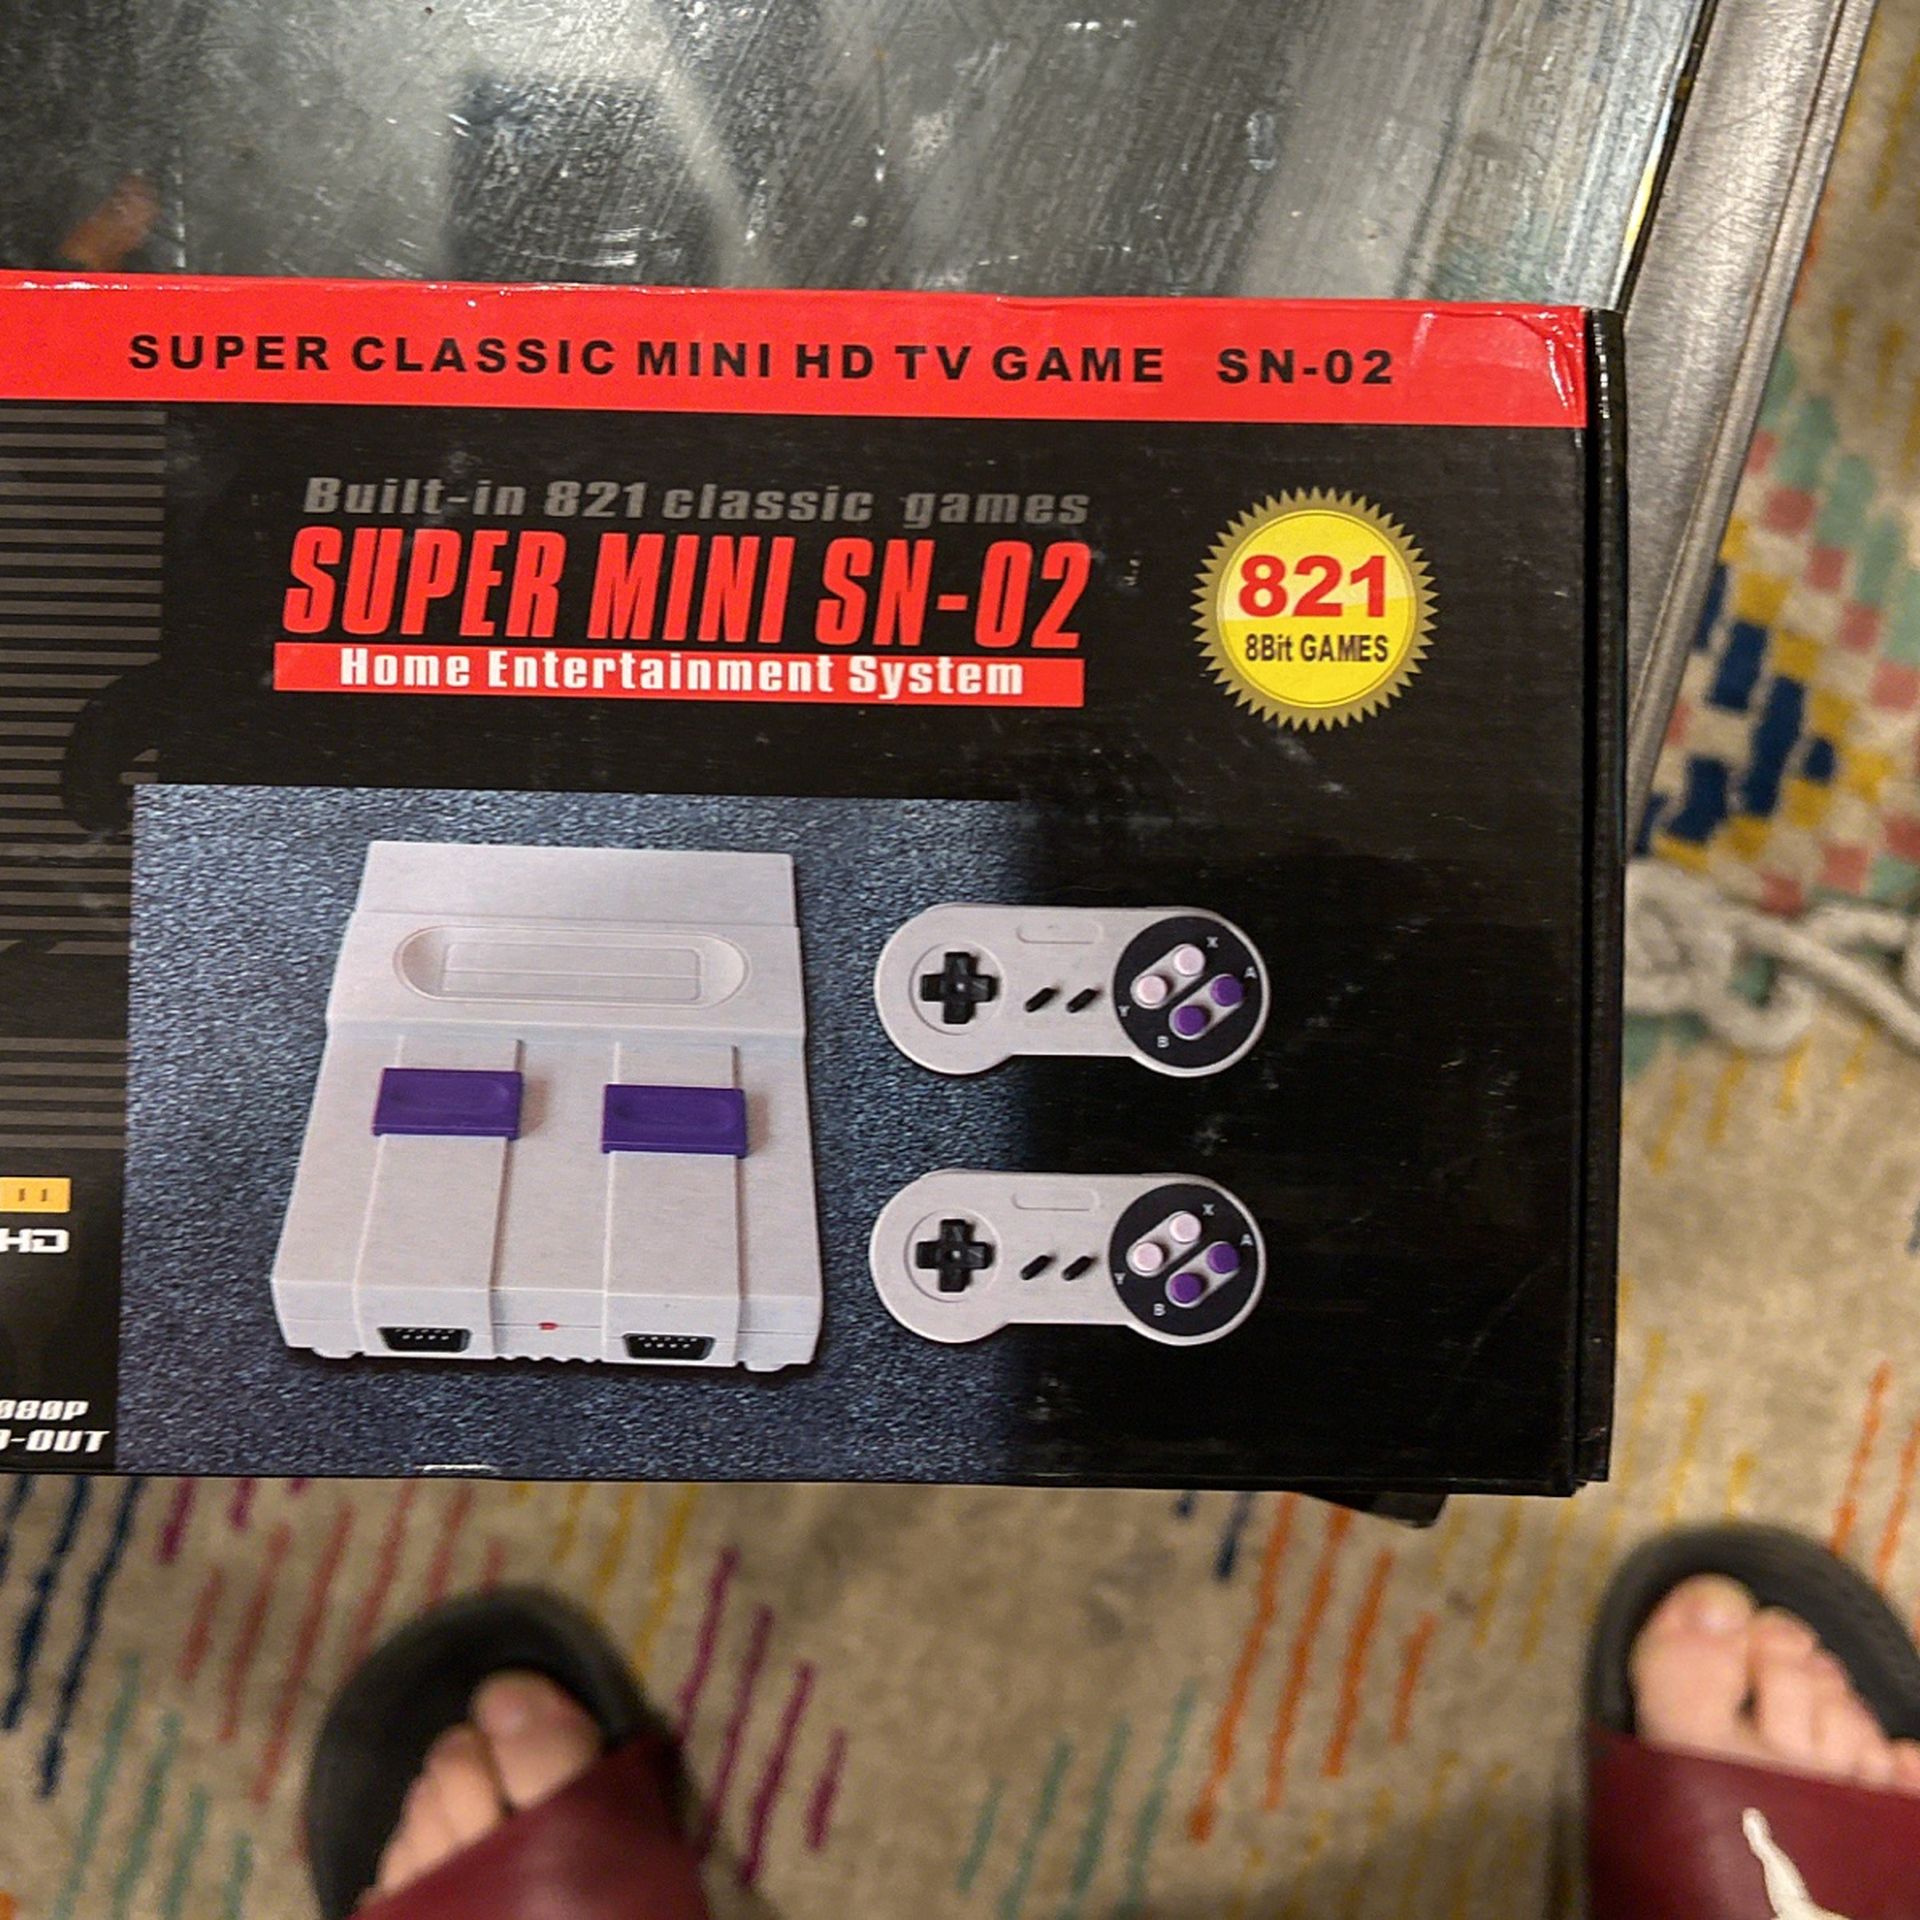 Super Nintendo Mini With 821 Games Built In